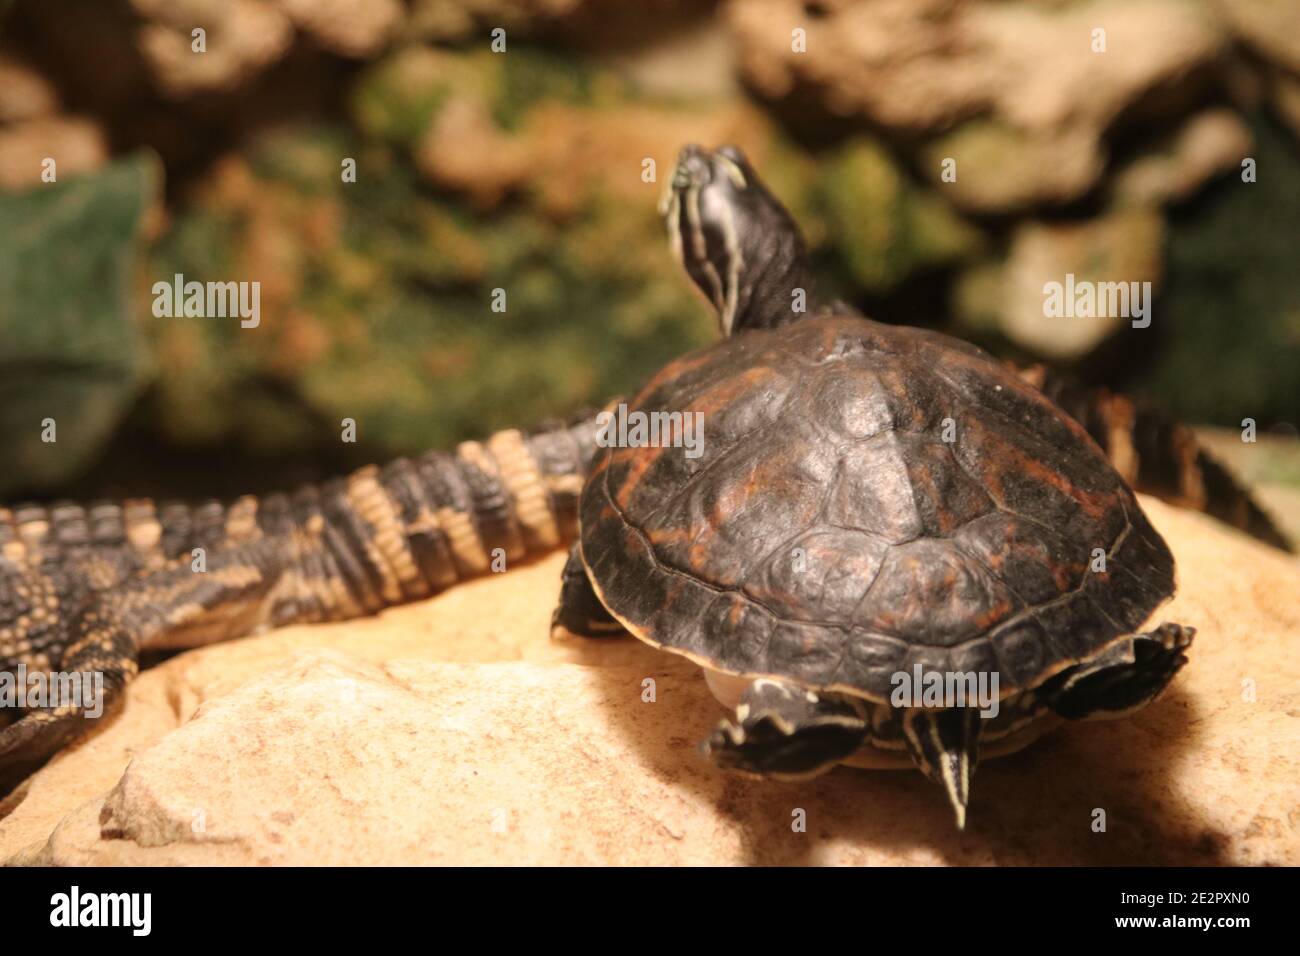 Turtle on a rock, Everglades National Park, Florida, USA Stock Photo